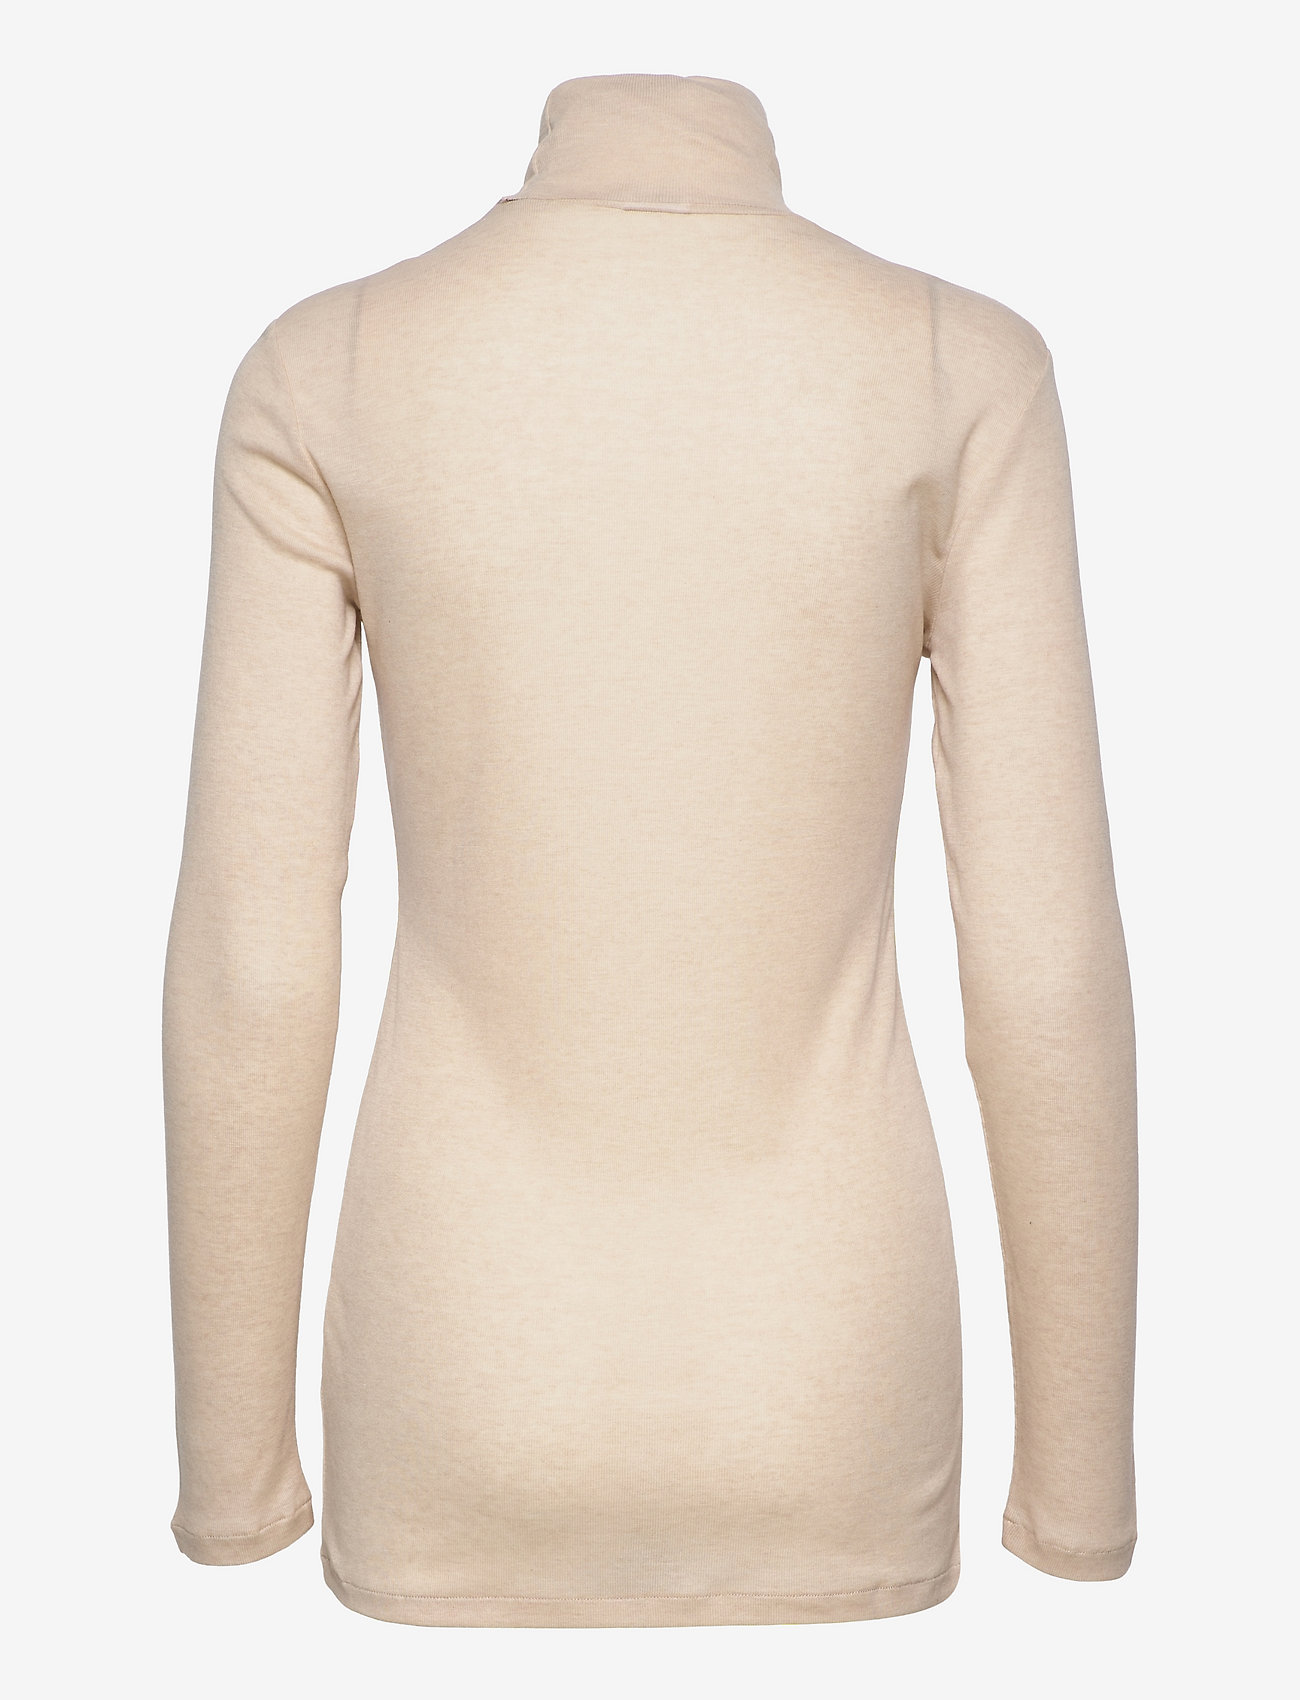 Filippa K - Romie Turtleneck Top - t-shirts & tops - soft beige - 1